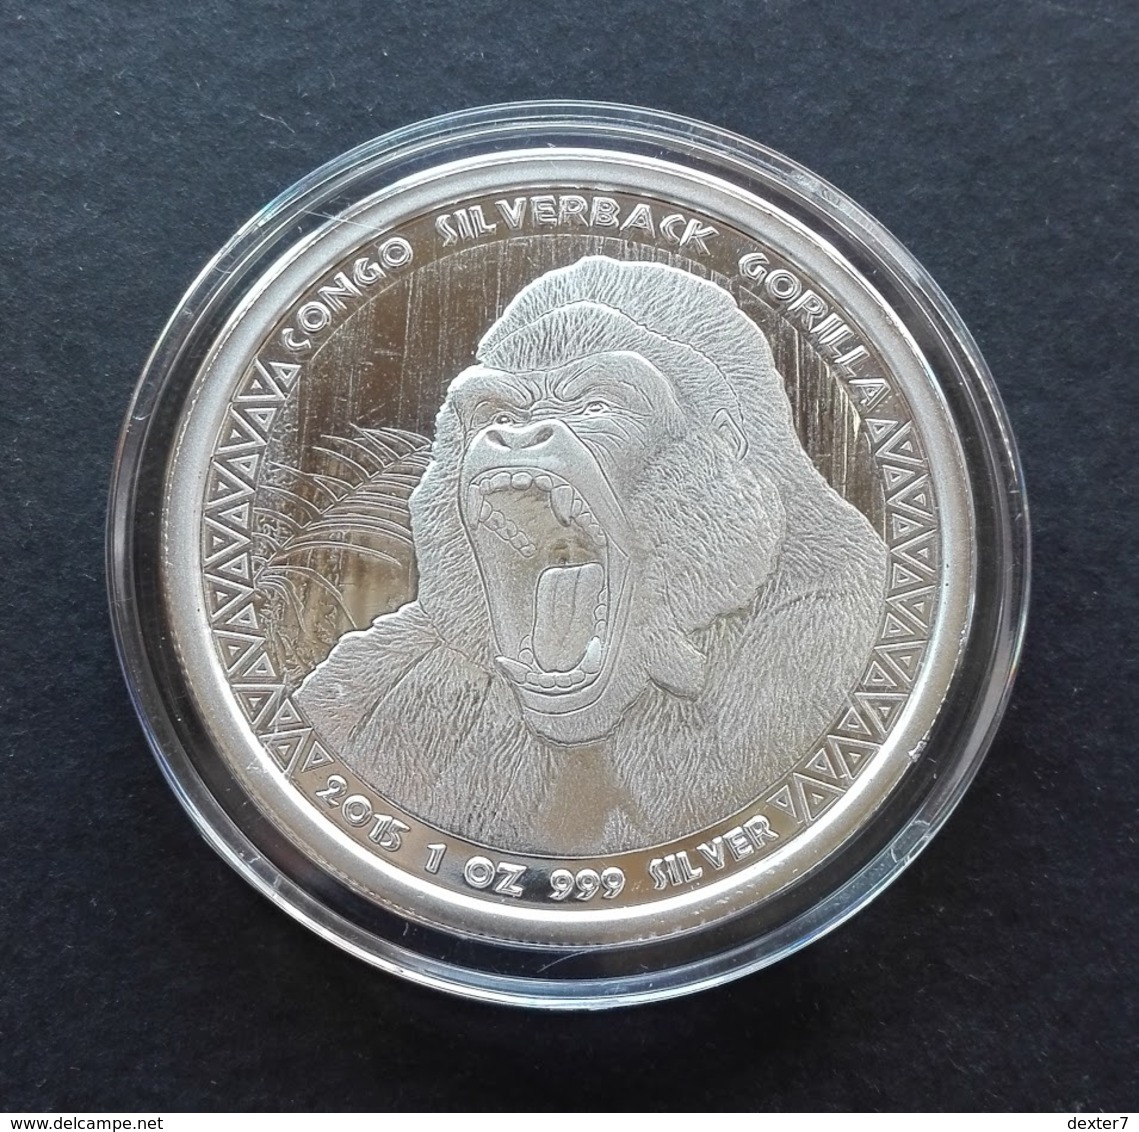 Congo, Gorilla 1 Oz 2015 Silver 999 Pure - 1 Oncia Argento Puro Bullion Scottsdale Mint - Congo (Democratische Republiek 1998)